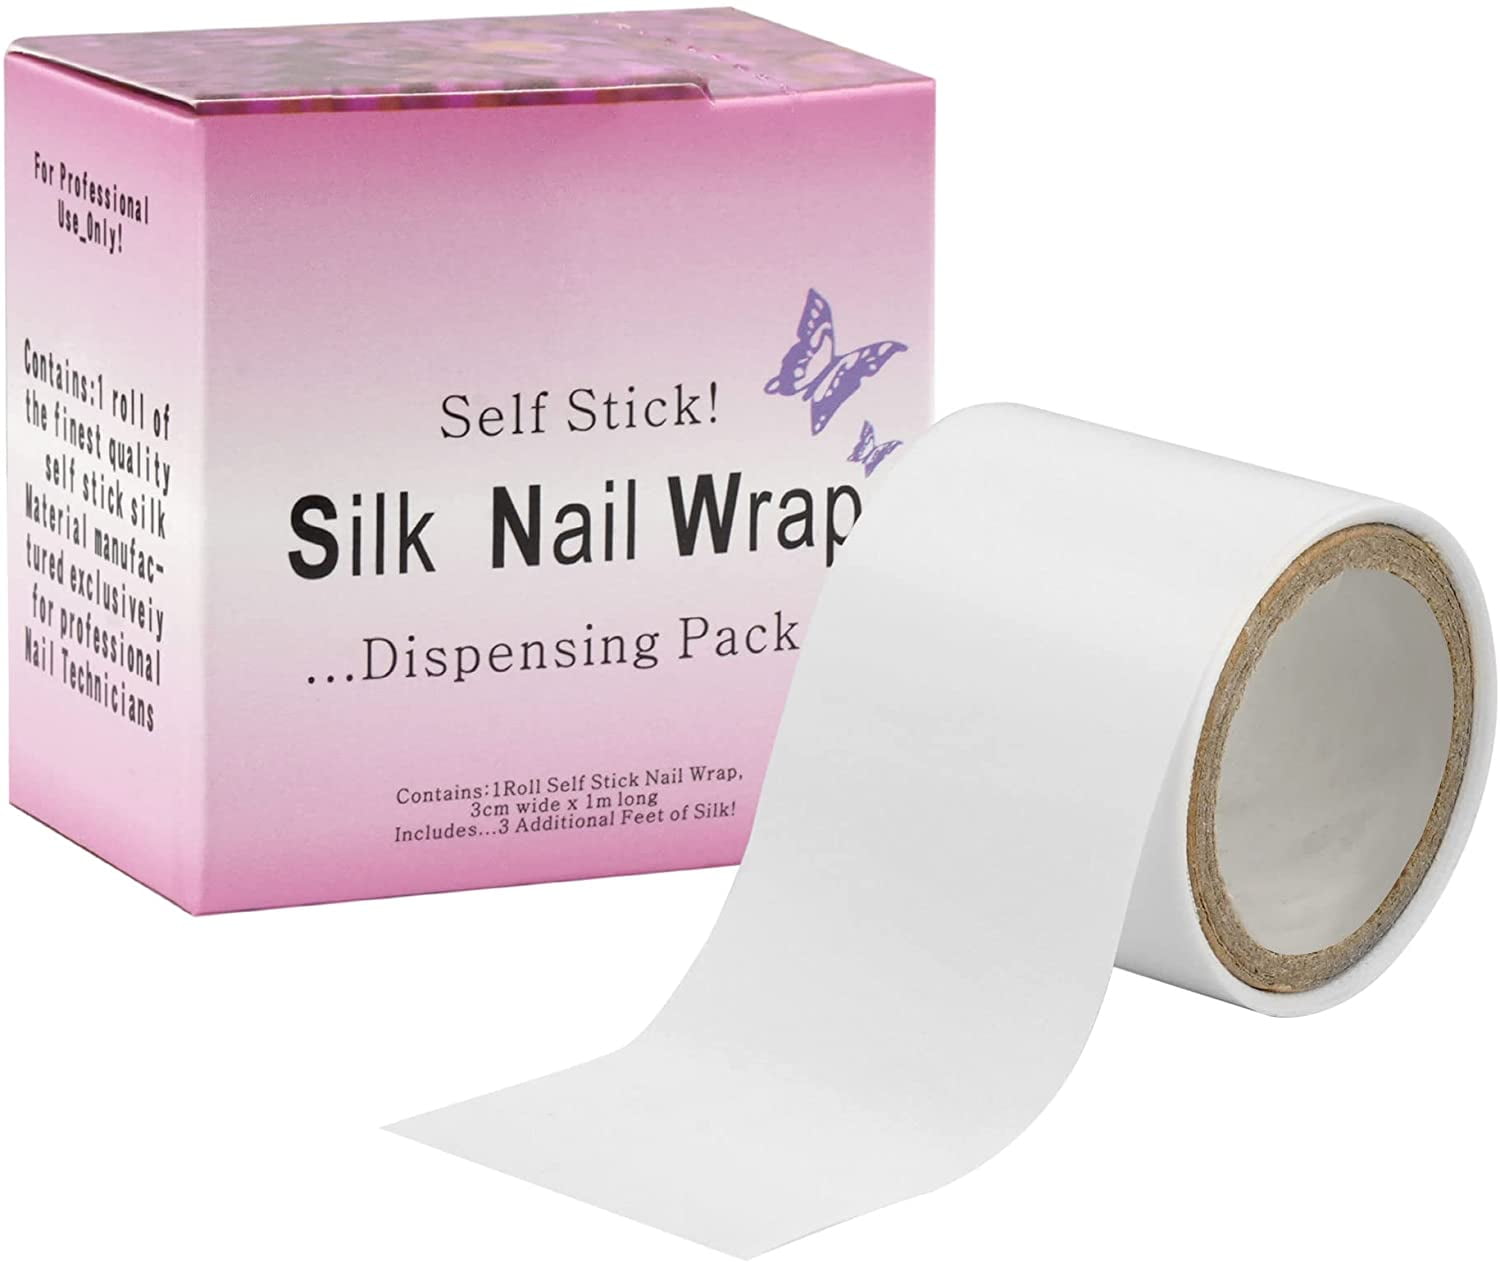 Chrontier Silk Nail Wrap Nail Splits Breaks Instant Reinforce Repair Bandage Tape Protector Self Adhesive Easy Trimerable for UV Gel Acrylic Nail f1016ace 73ee 46ef b247 19d2f37cf627.bcb5be6ff258968c4b0529430b9bfc10